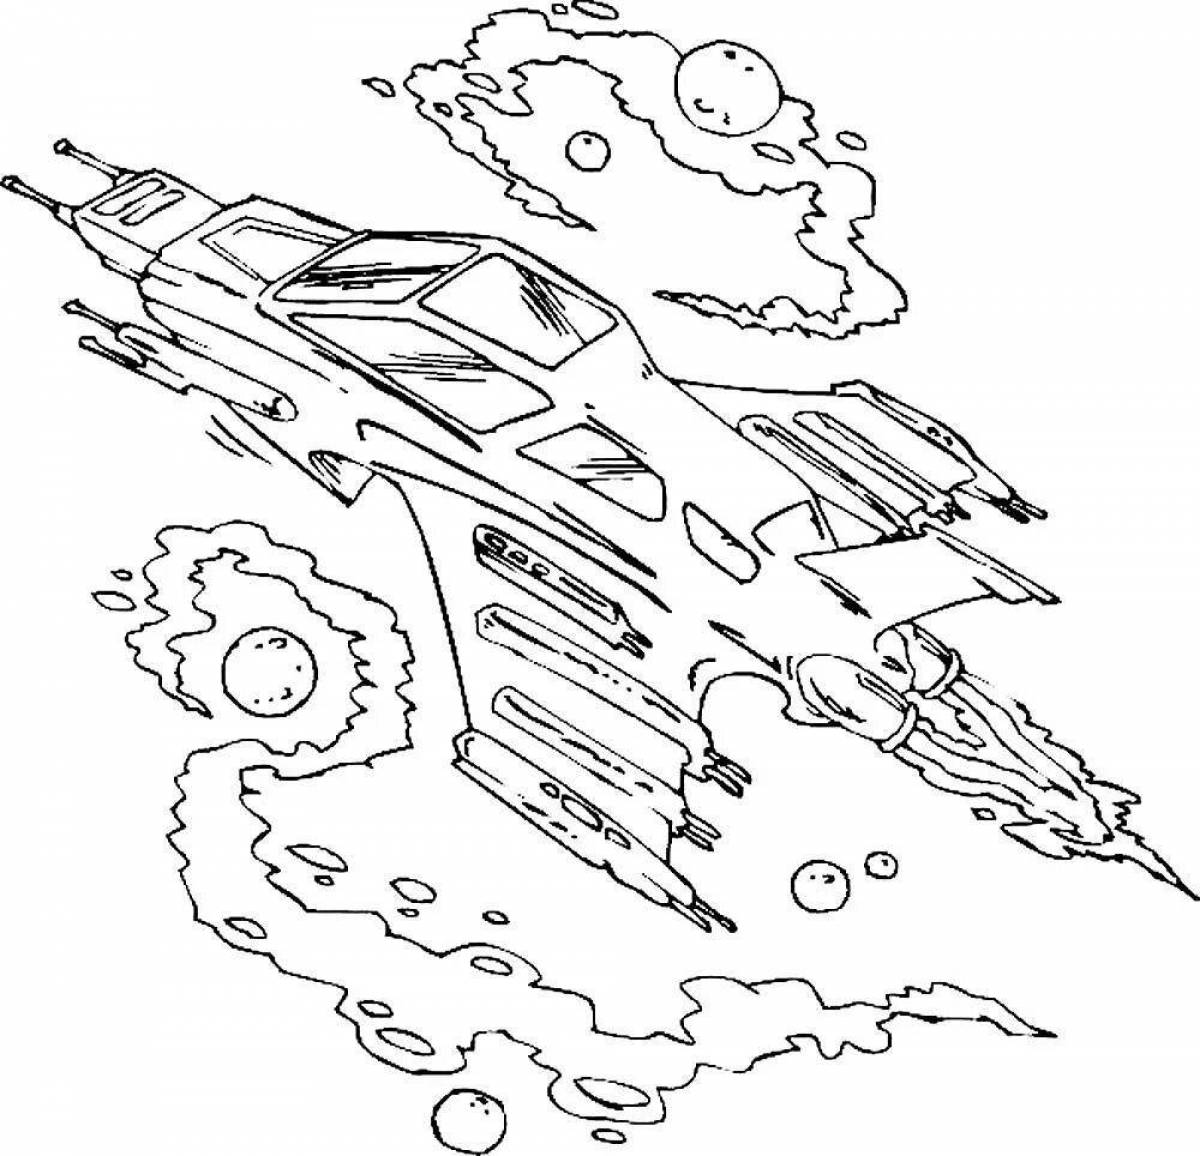 Fun spaceship coloring page